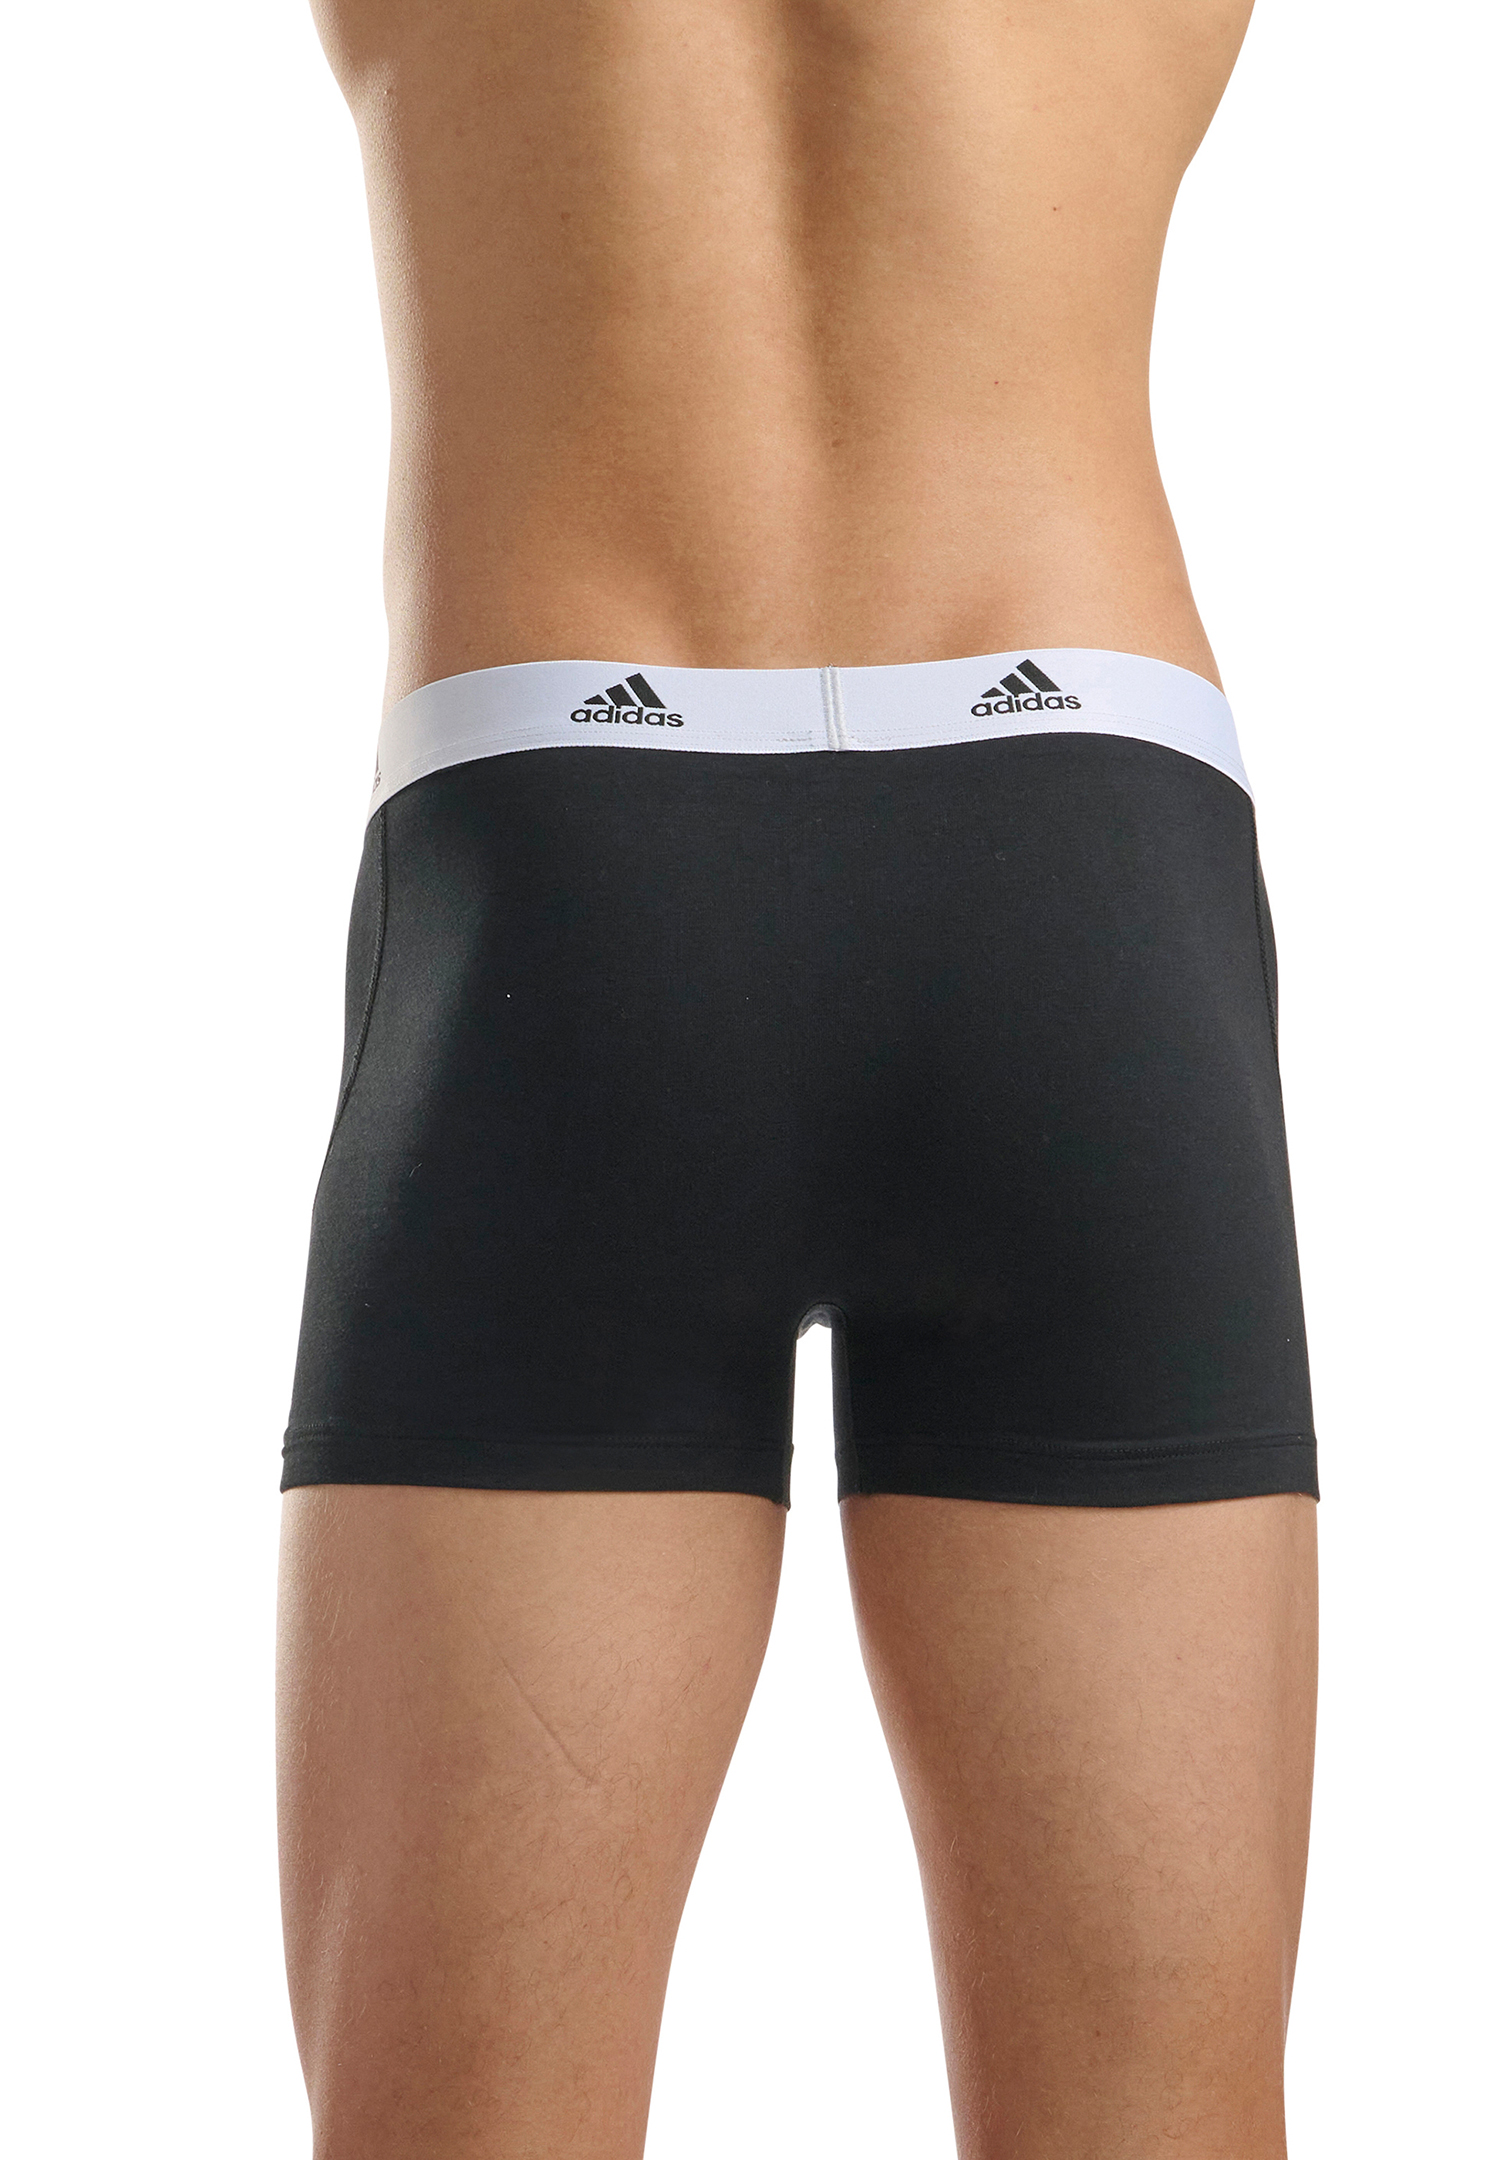 6er Pack Adidas Basic Trunk Men Herren Unterhose Shorts Unterwäsche 6er Pack 